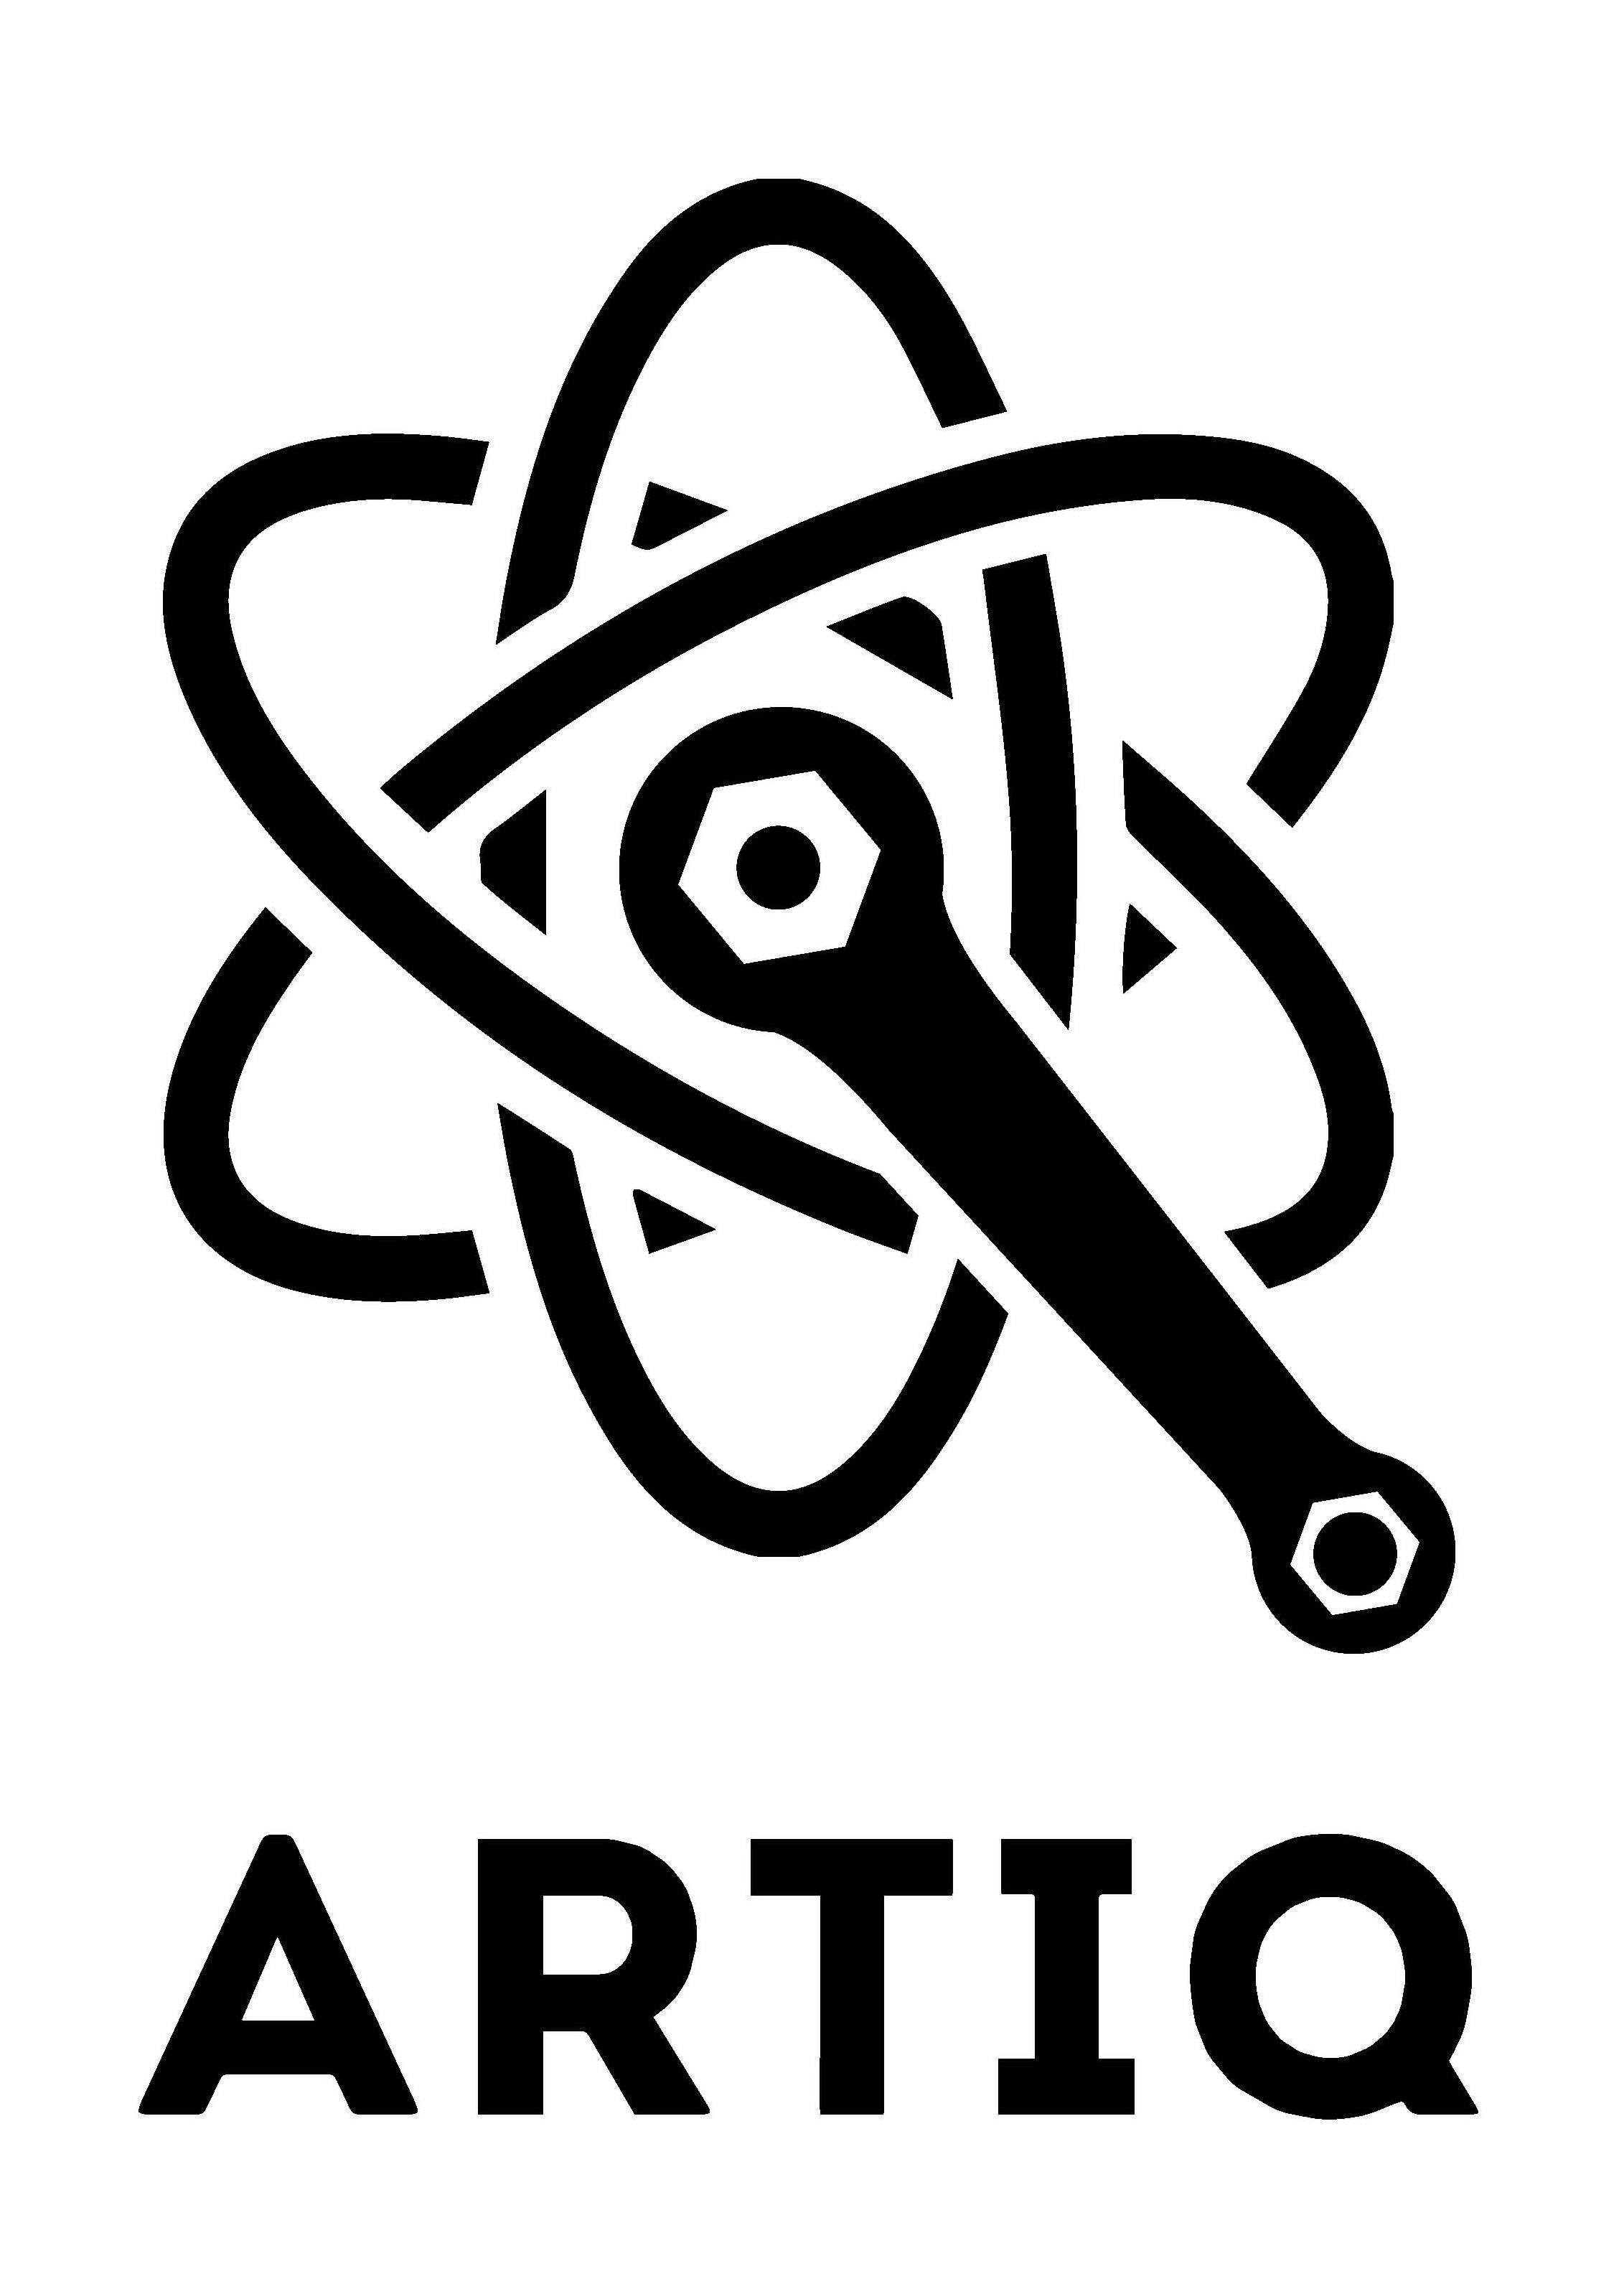 Trademark Logo ARTIQ